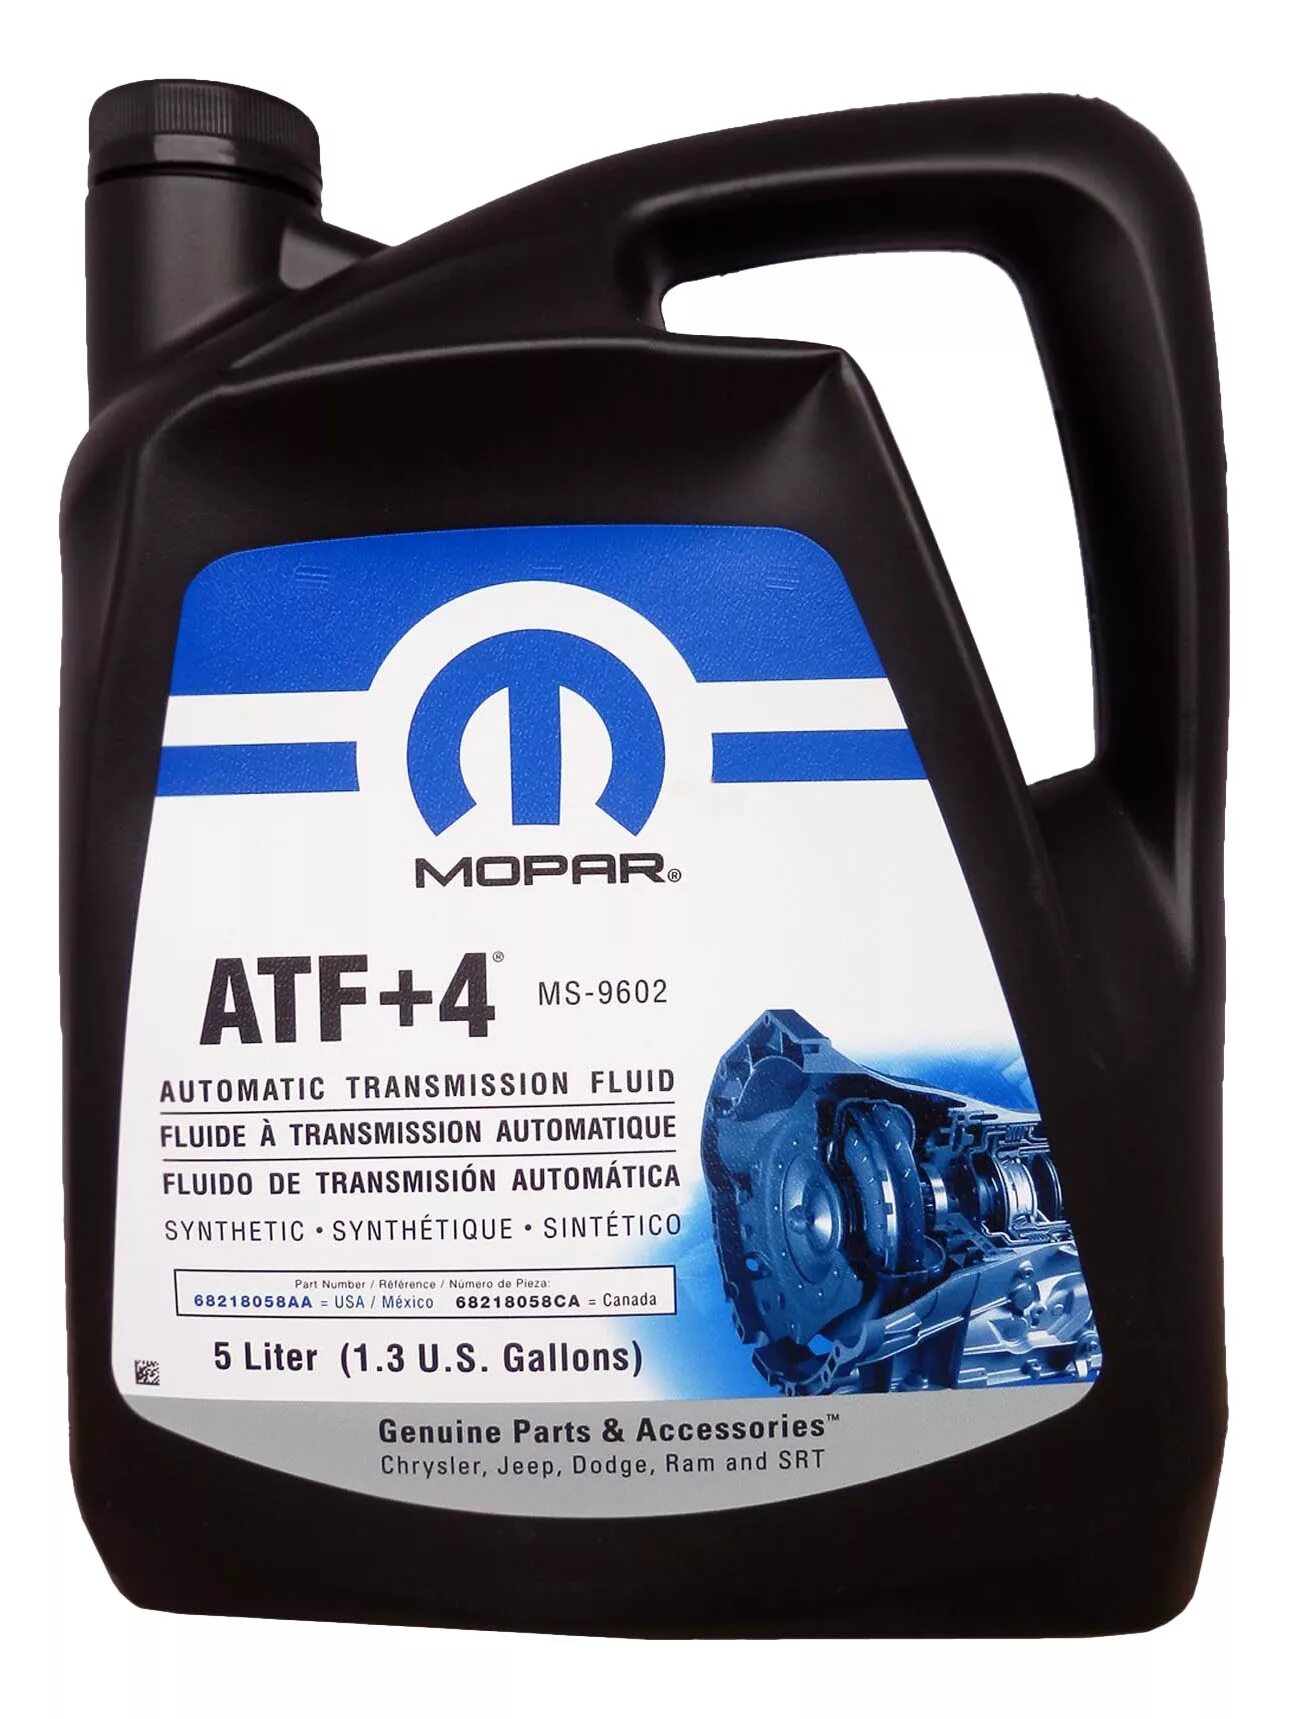 Atf 4 цена. Mopar ATF+4 (MS-9602). Mopar ATF+4 9602 артикул. Масло трансмиссионное мопар АТФ +4. 68218058aa Mopar.